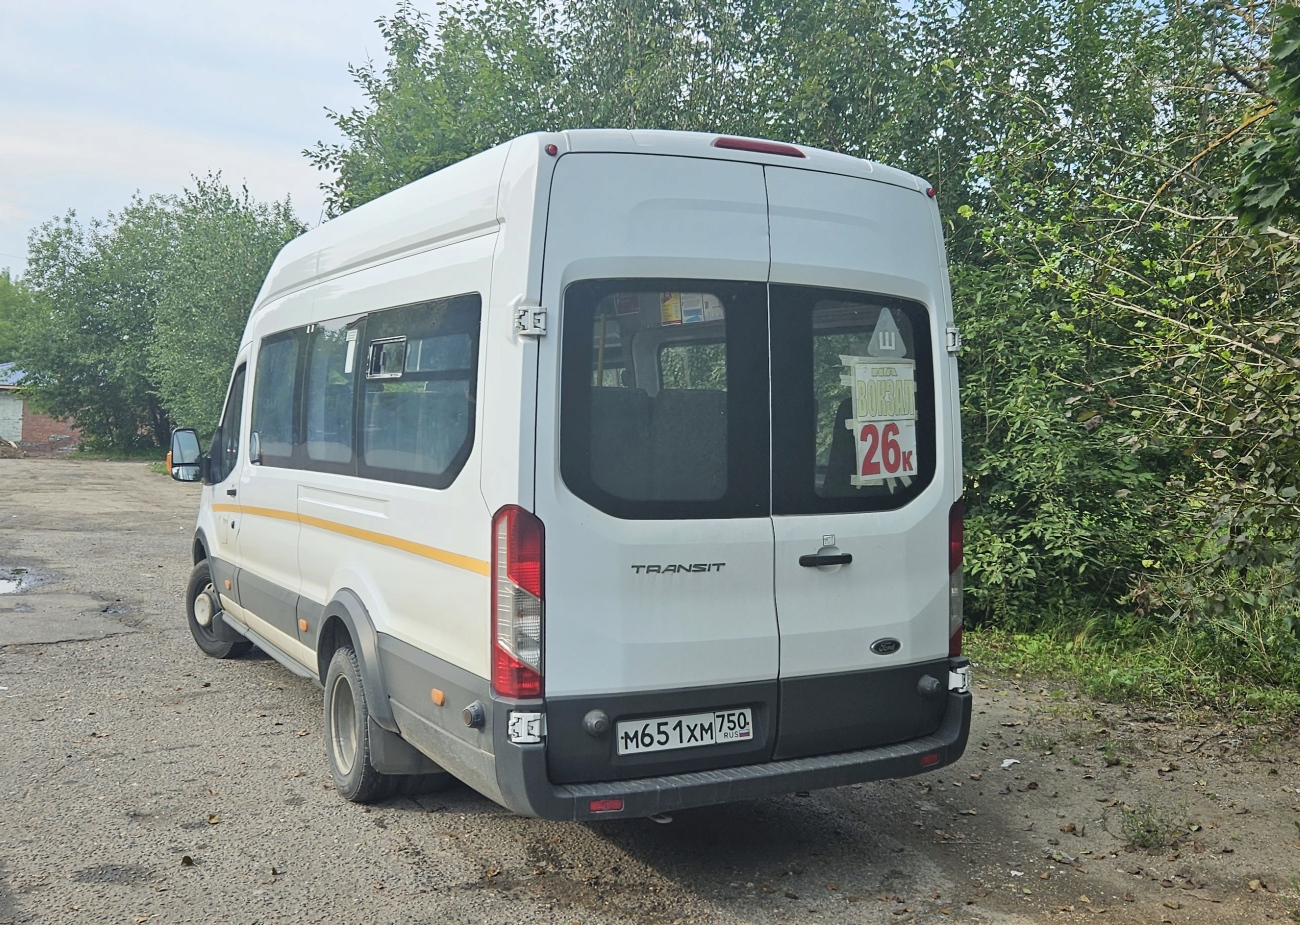 Московская область, Ford Transit FBD [RUS] (Z6F.ESG.) № М 651 ХМ 750